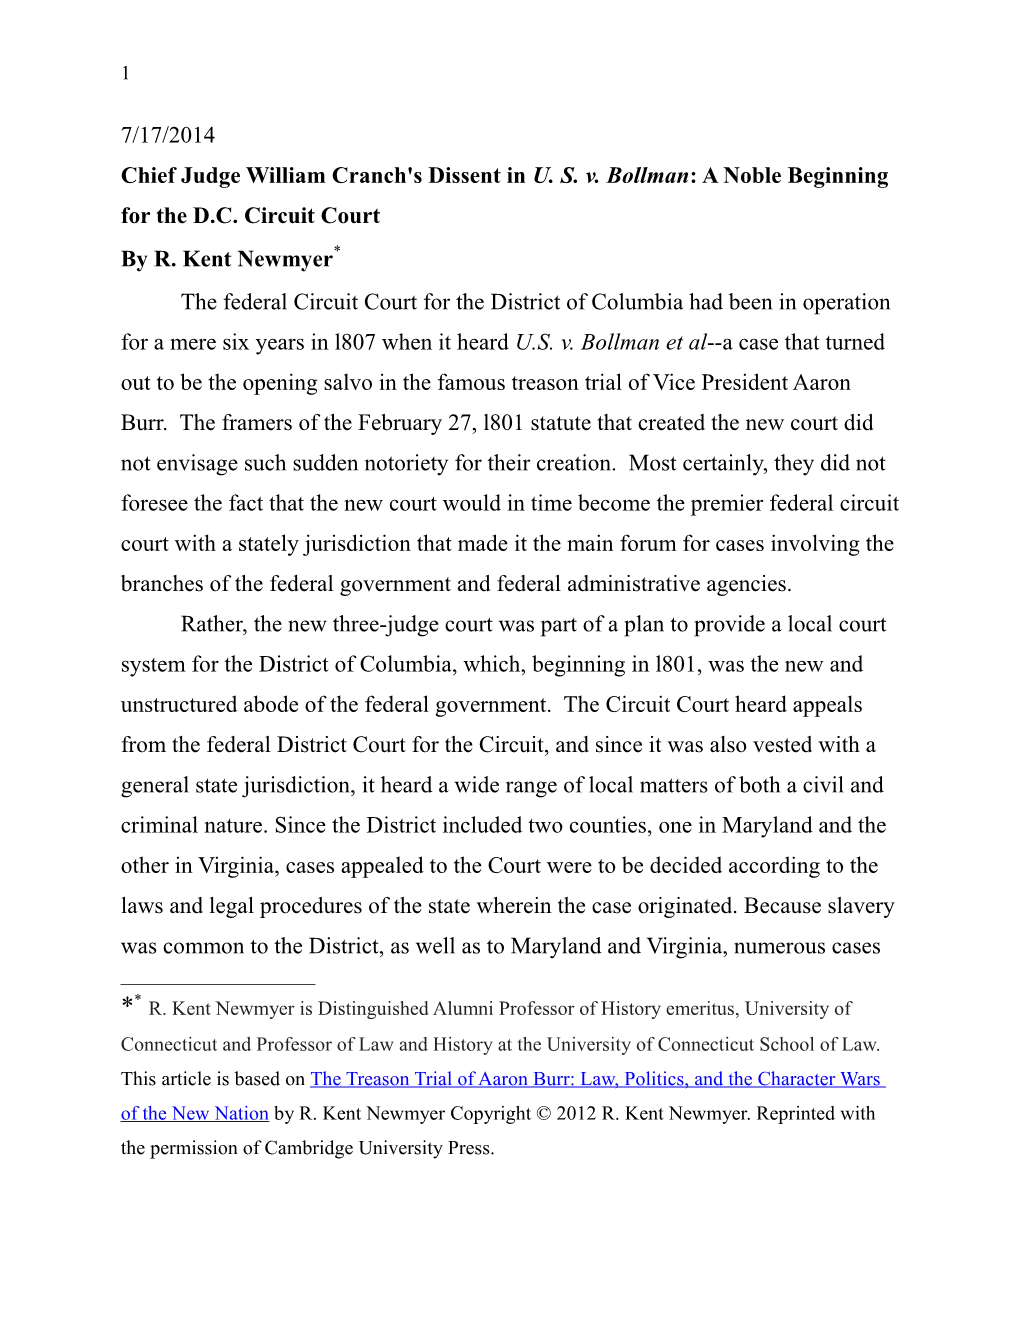 7/17/2014 Chief Judge William Cranch's Dissent in US V. Bollman